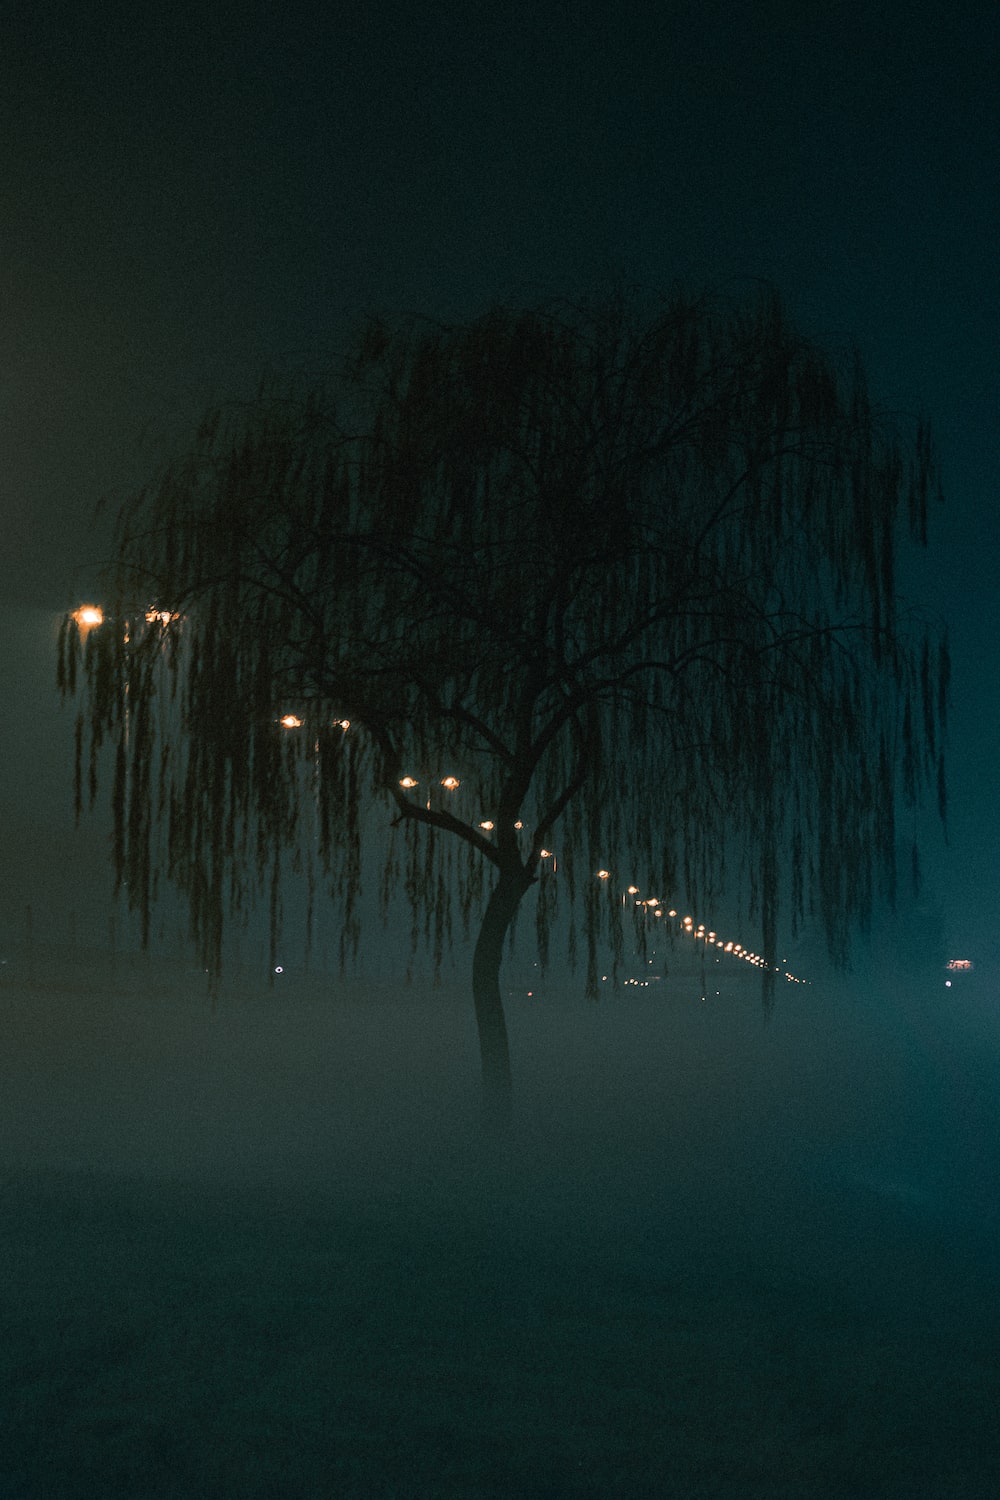 A street light is on in the fog - Dark, shadow